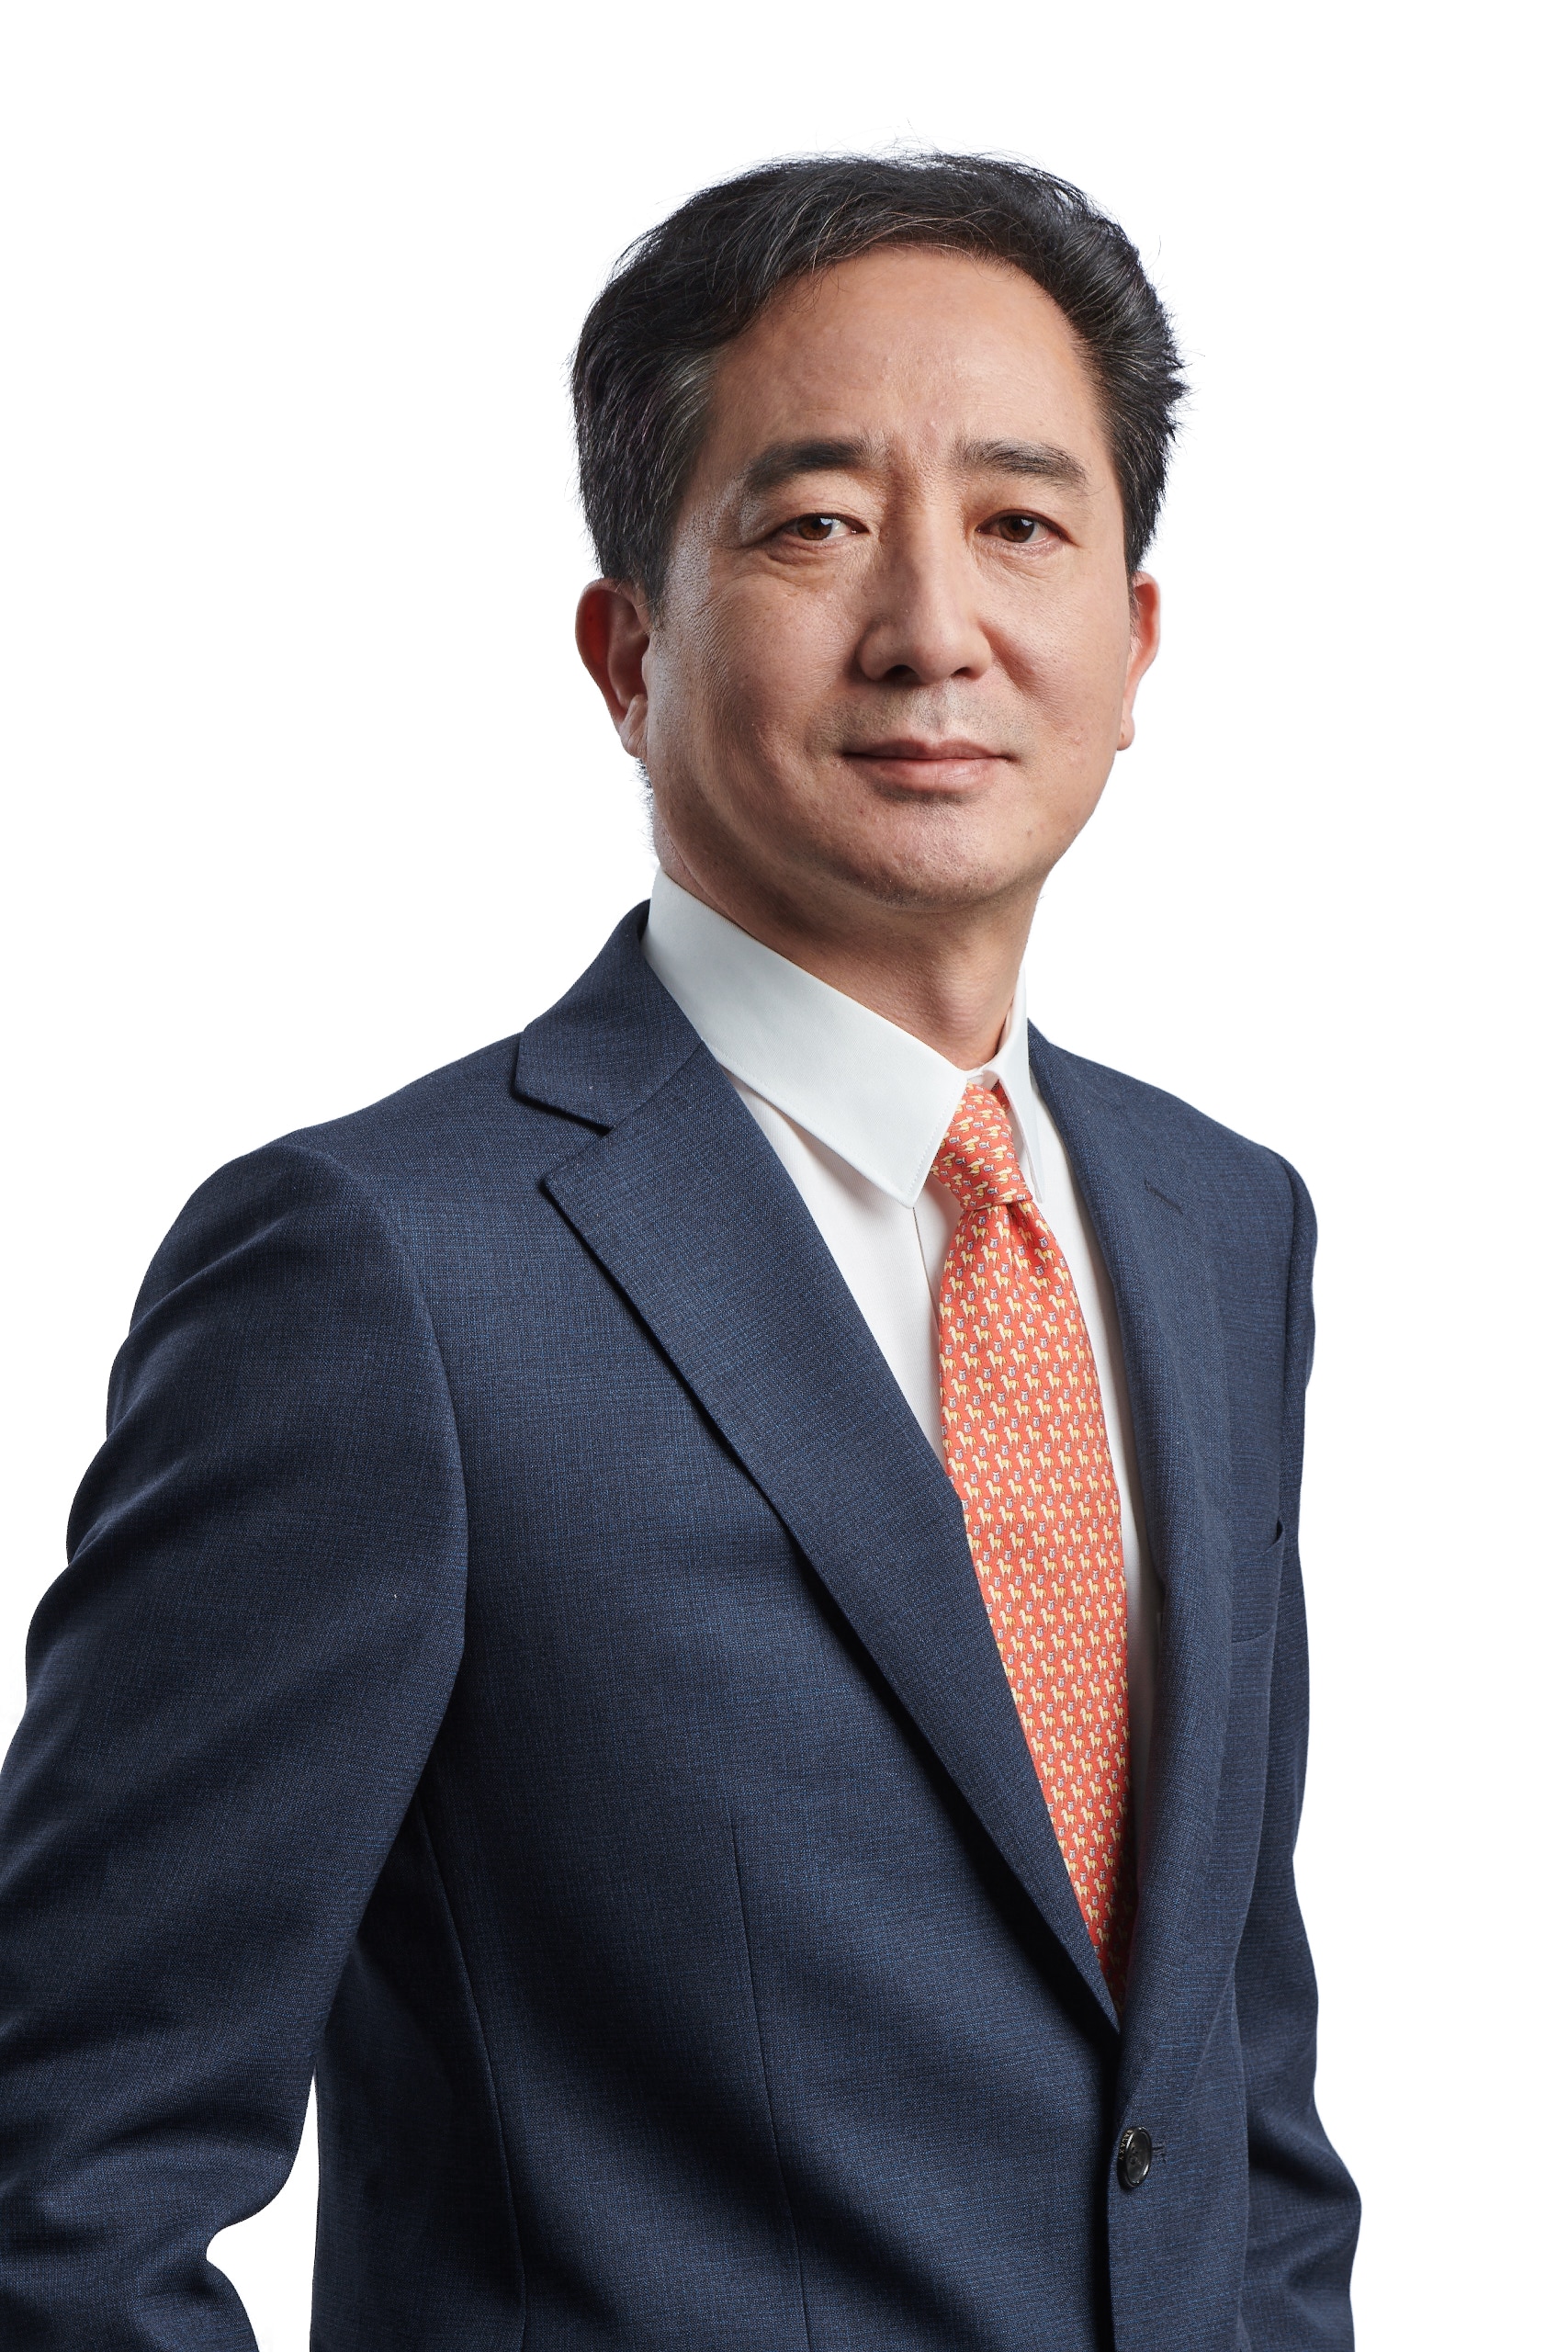 Justin Choi, Managing Director of LG Electronics Malaysia